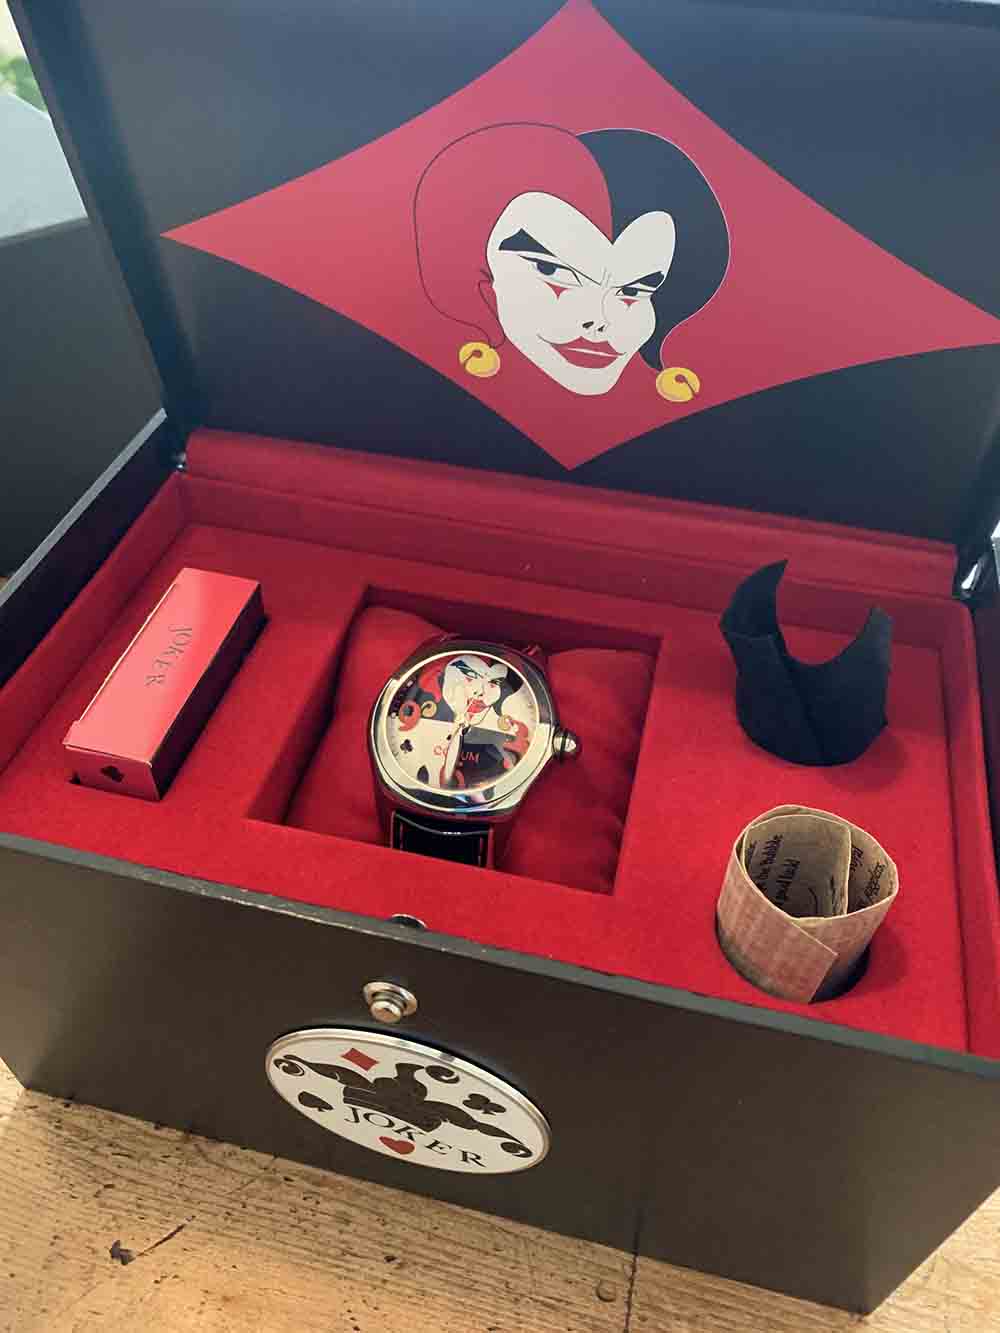 Rare joker watch goes under the hammer at auction - Business News